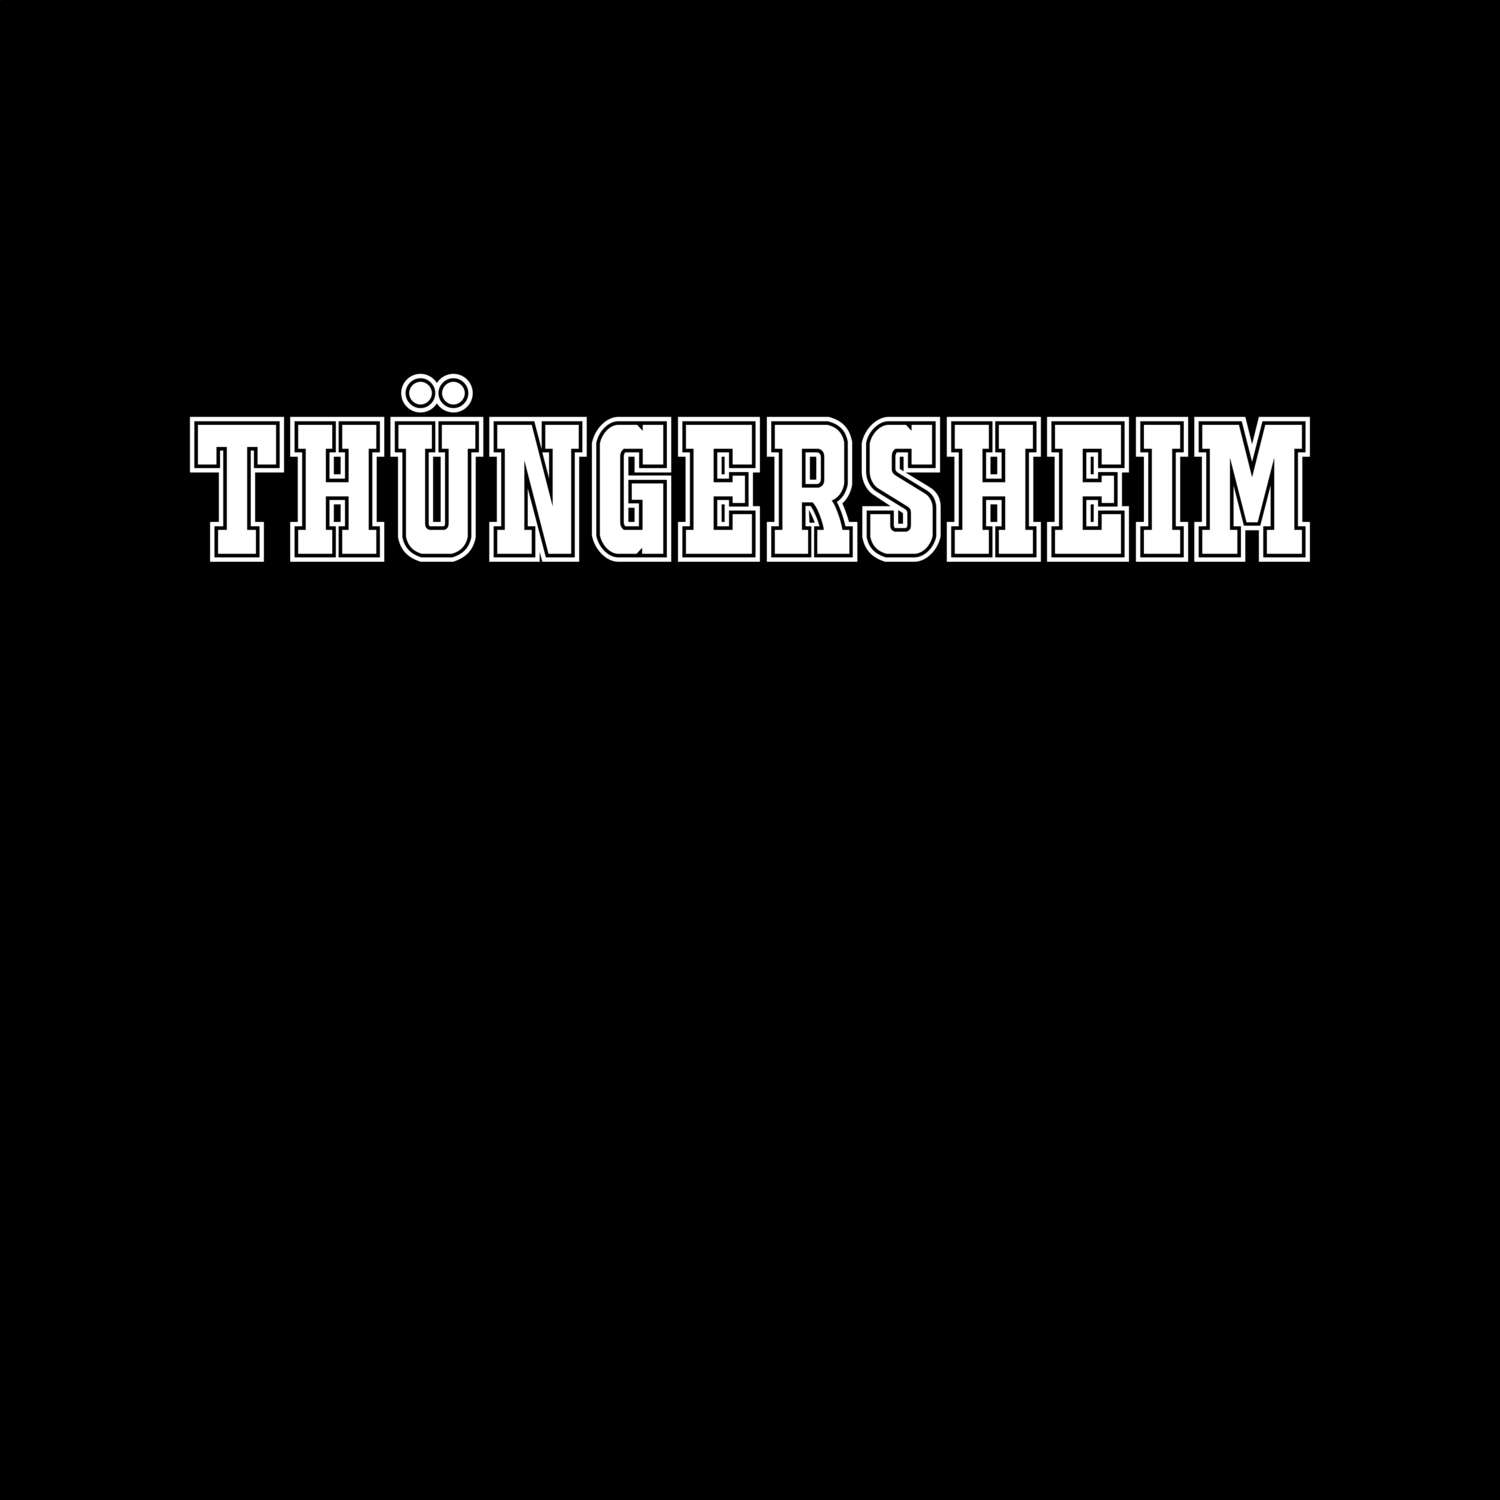 Thüngersheim T-Shirt »Classic«